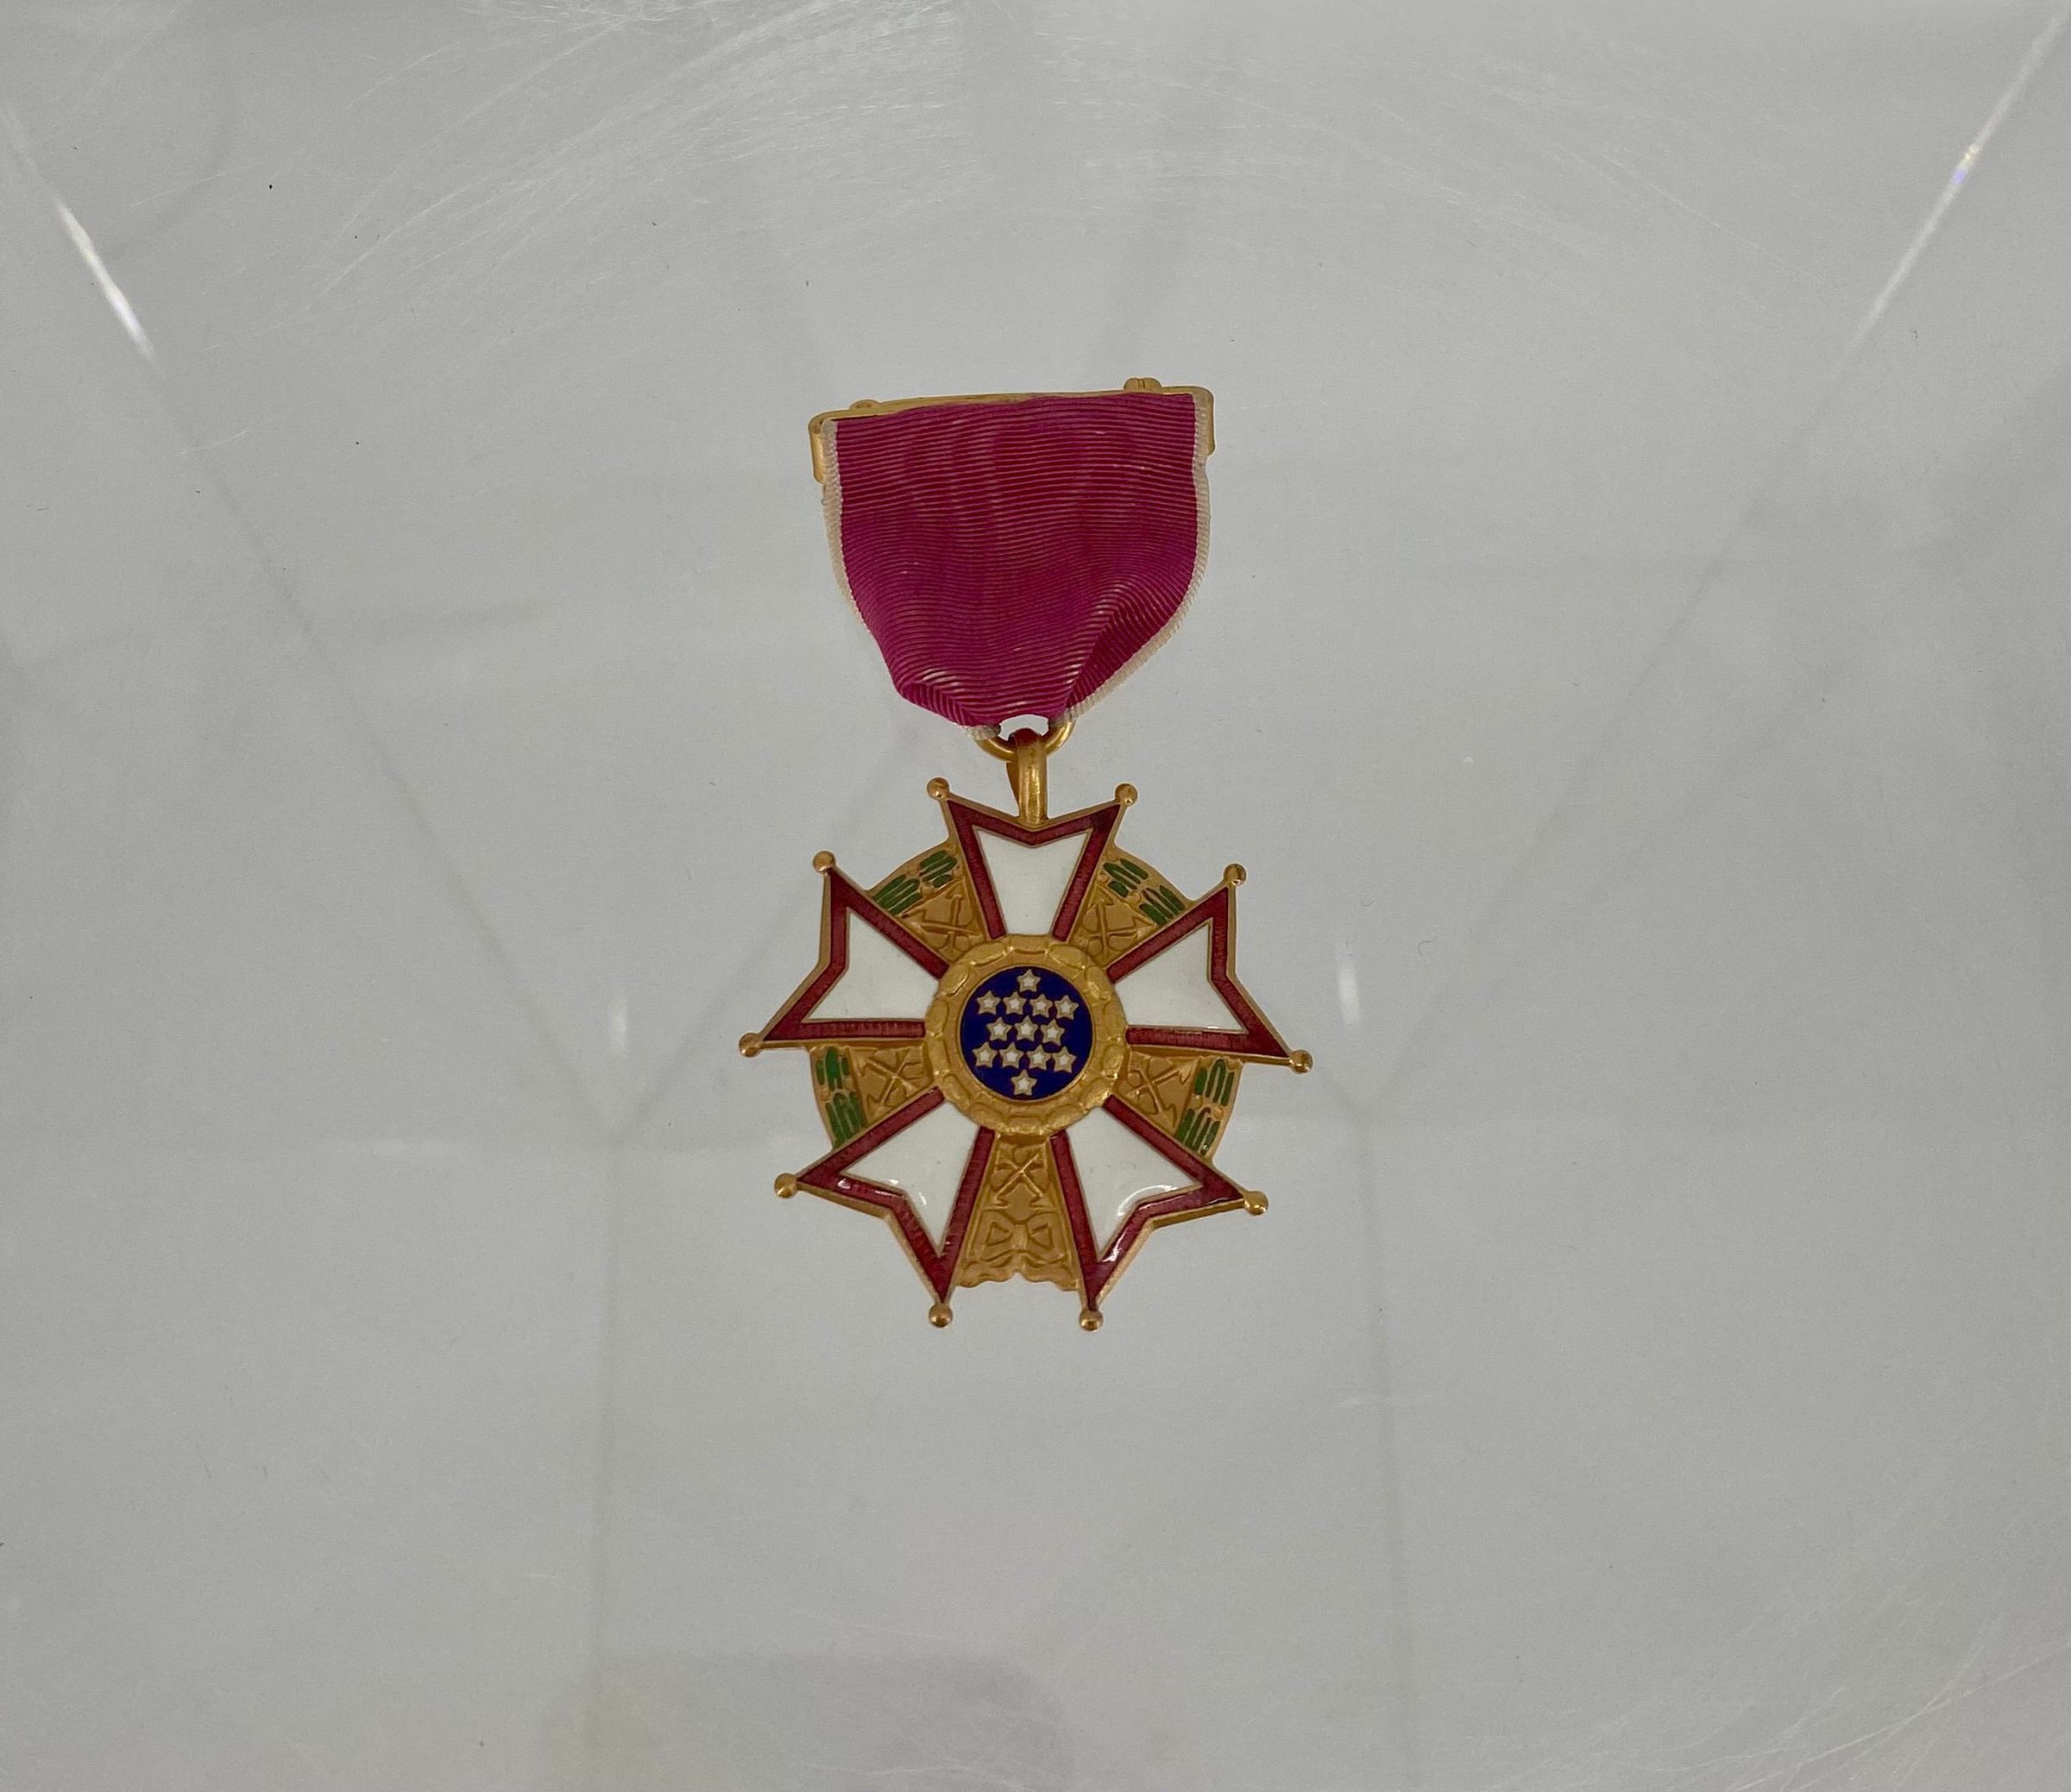 Primary Image of Legion of Merit of James H. Flatley, Jr.